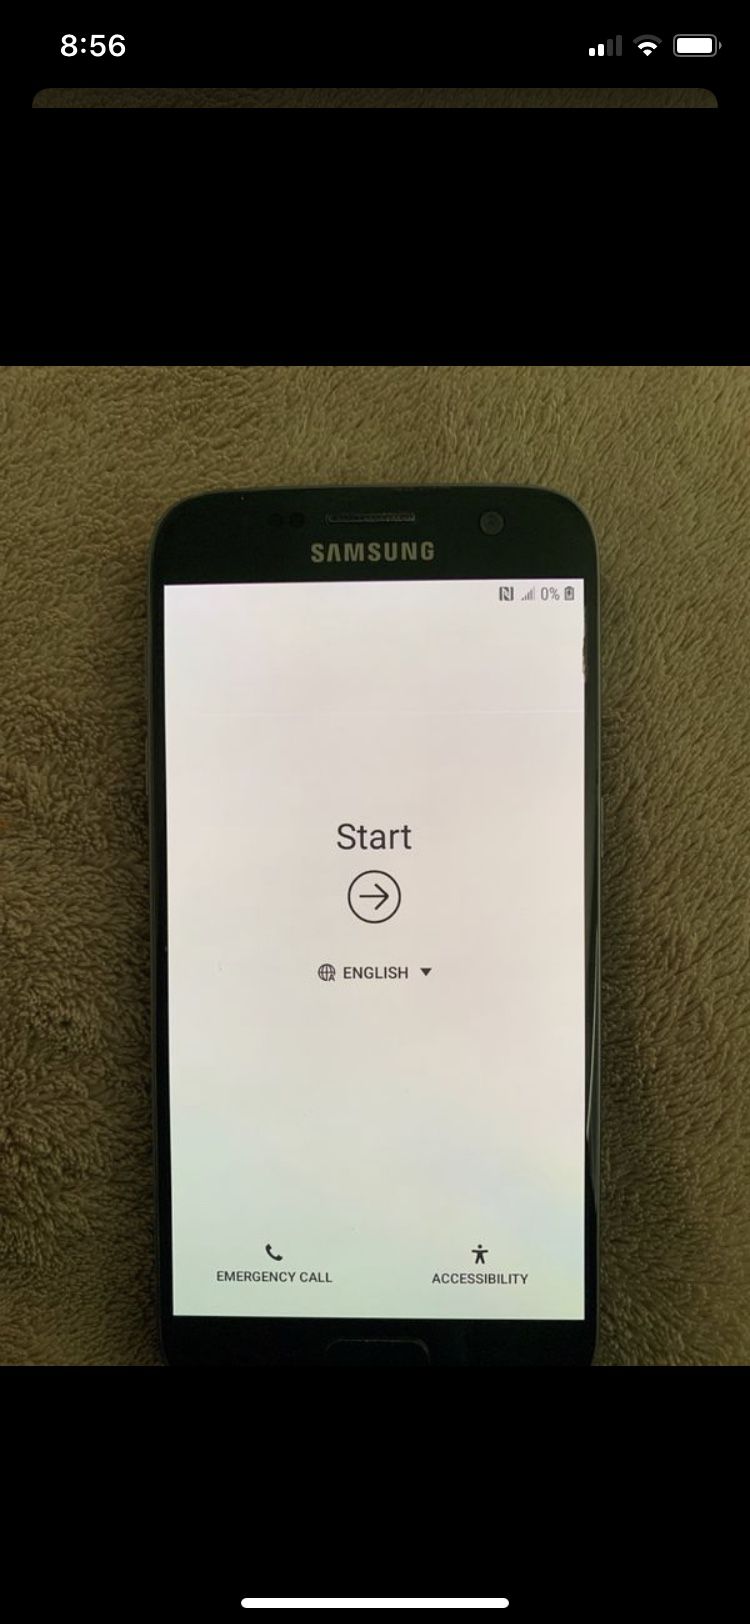 Samsung Galaxy S7 & Wireless Charging dock